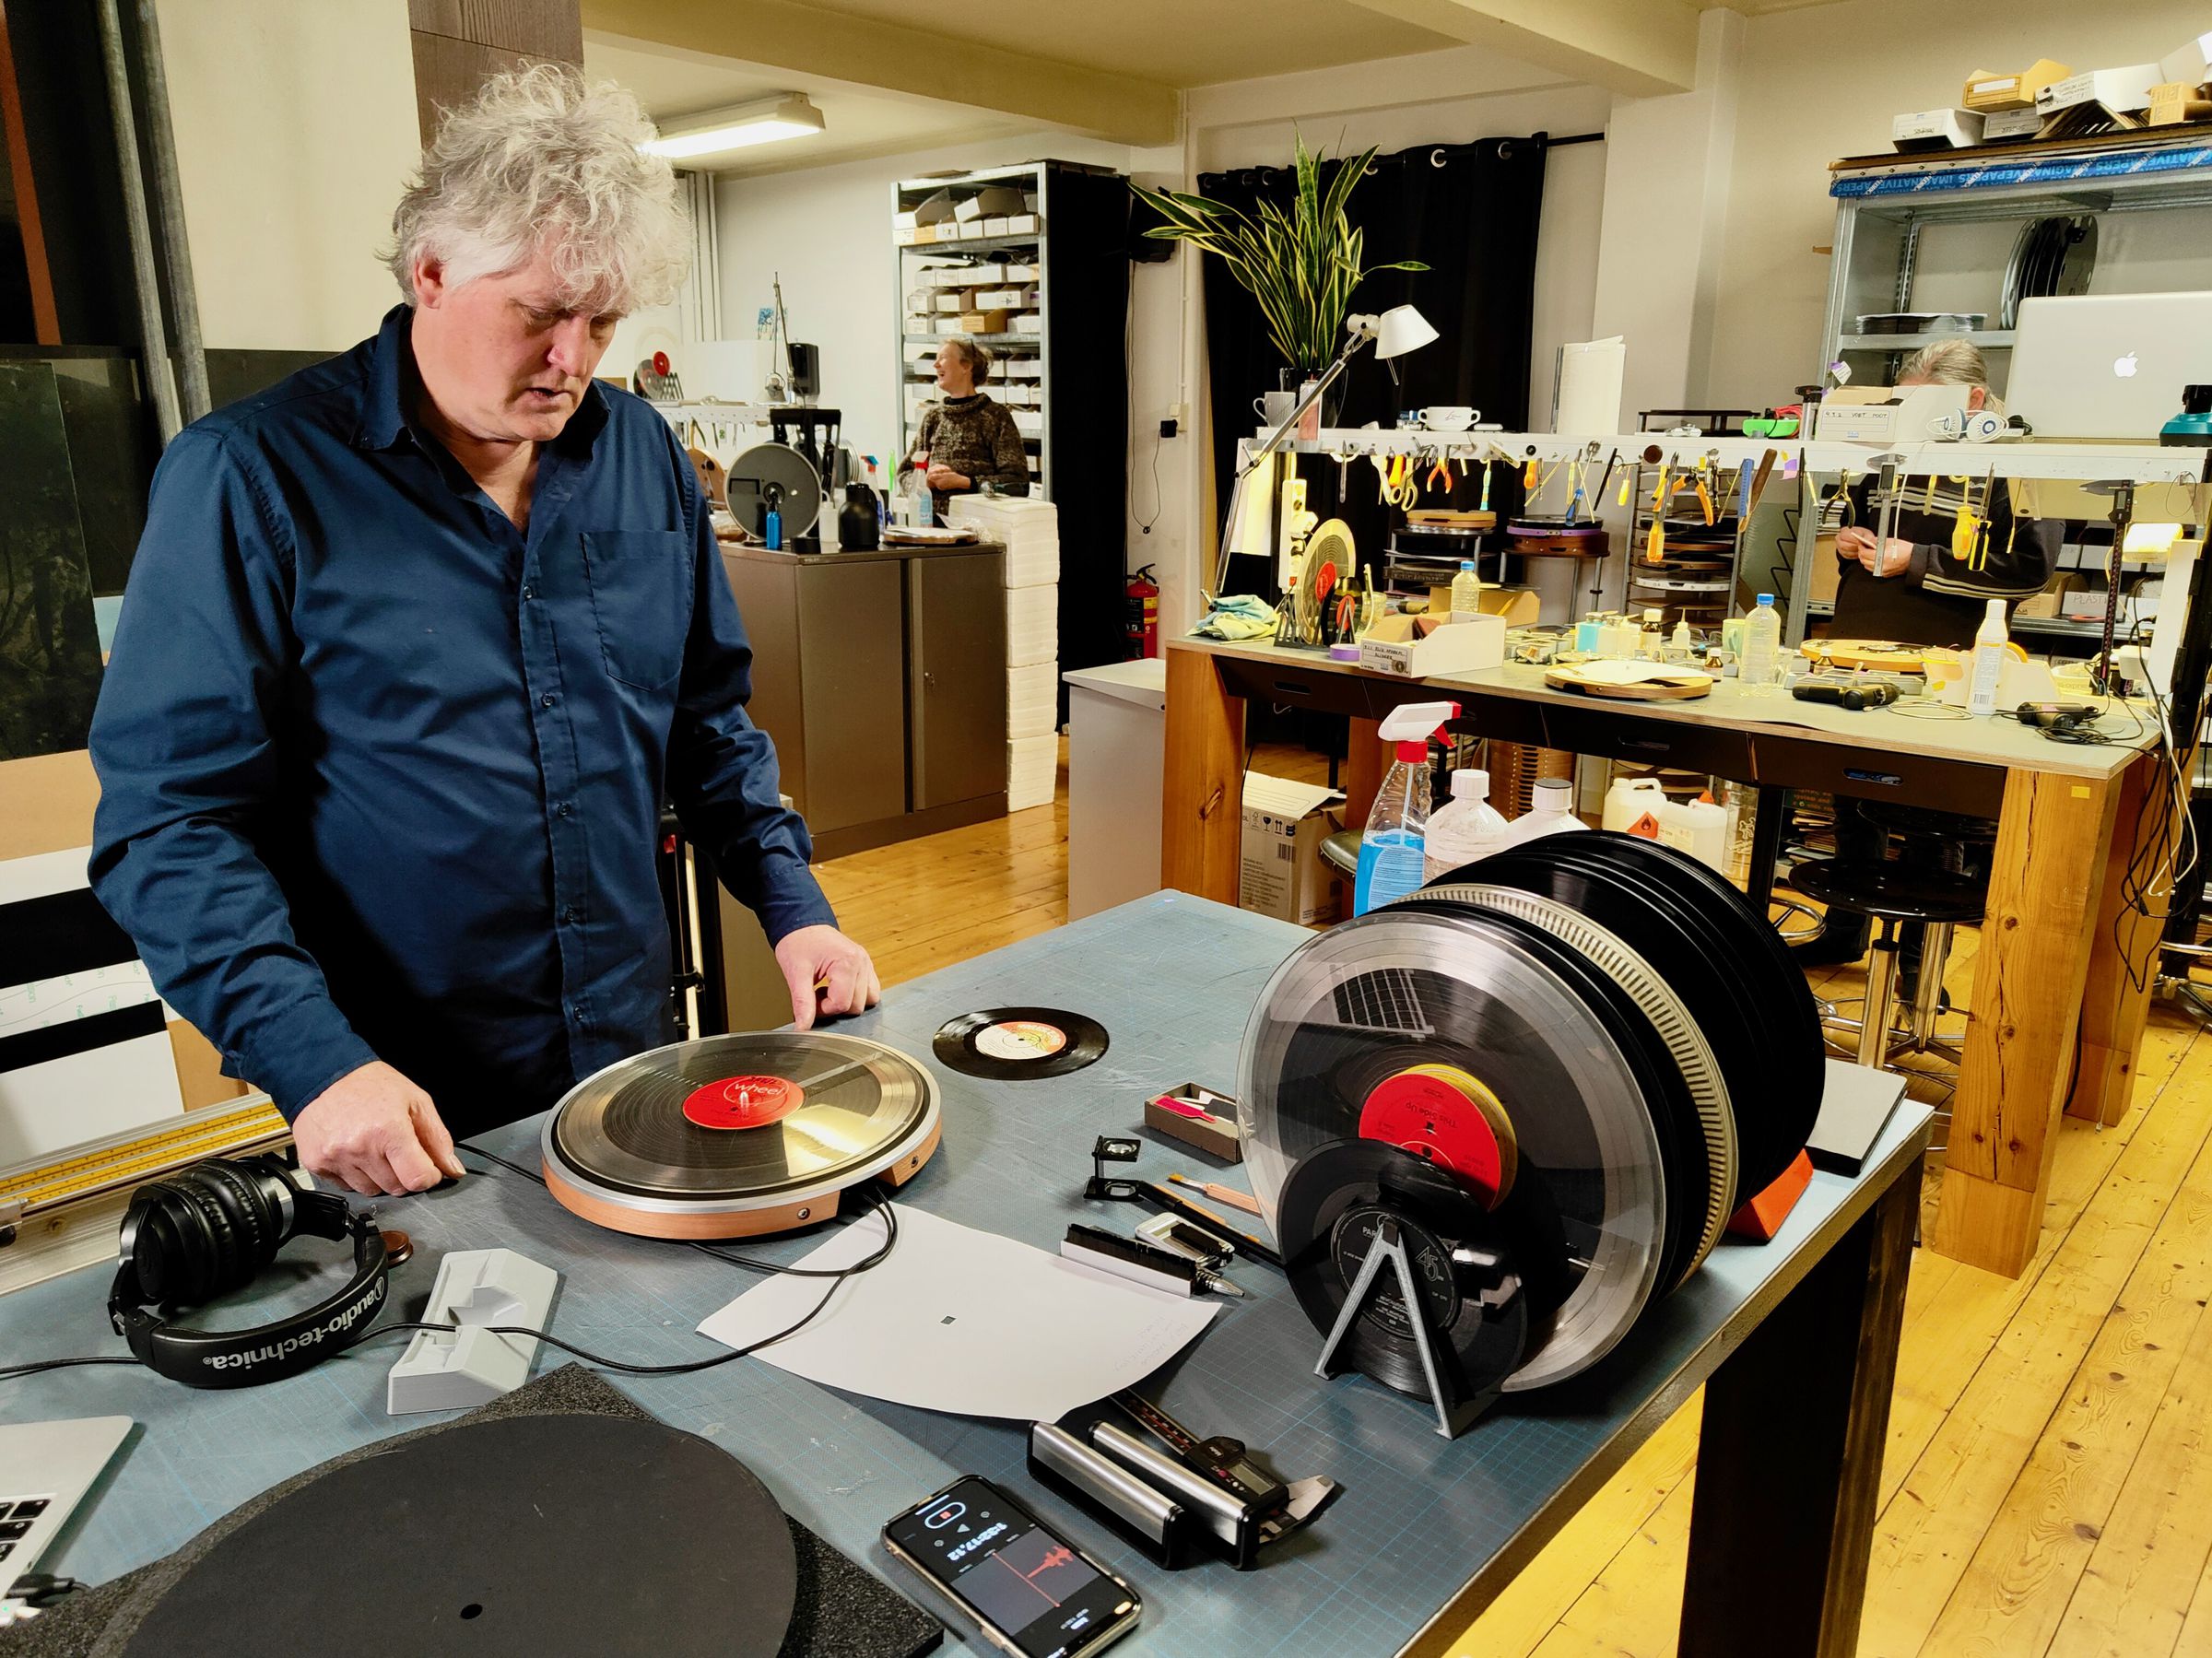 Kolkman prepares a Wheel 2 for listening over headphones as Greet van den Berg enjoys a laugh.